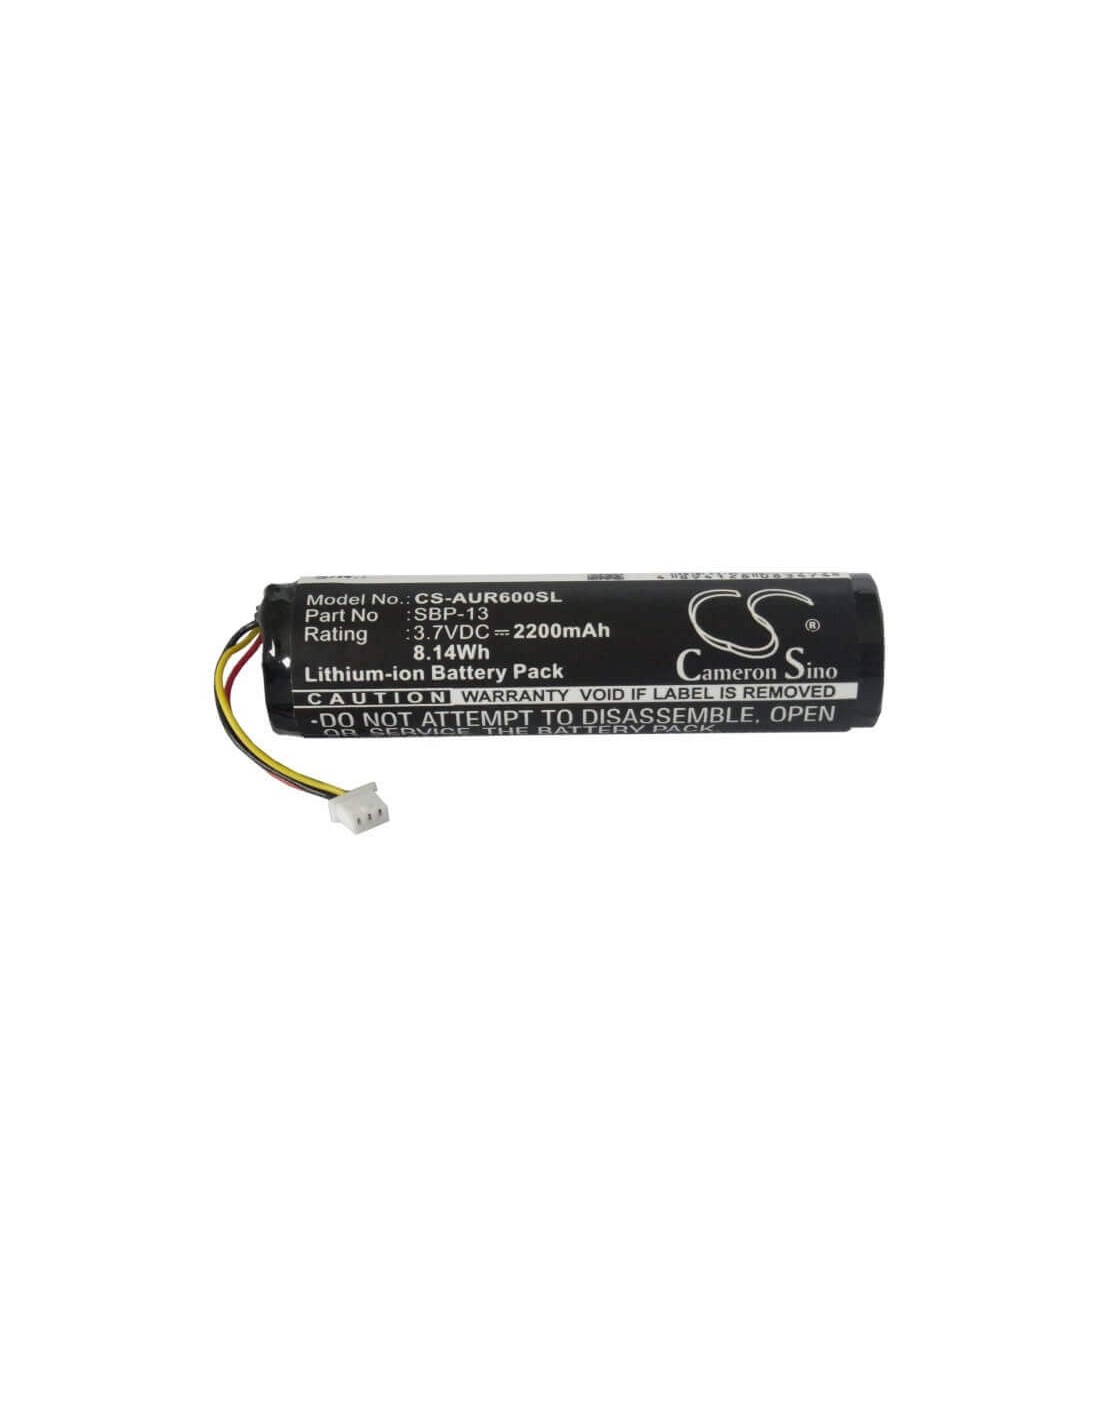 Battery for Asus R600 3.7V, 2200mAh - 8.14Wh